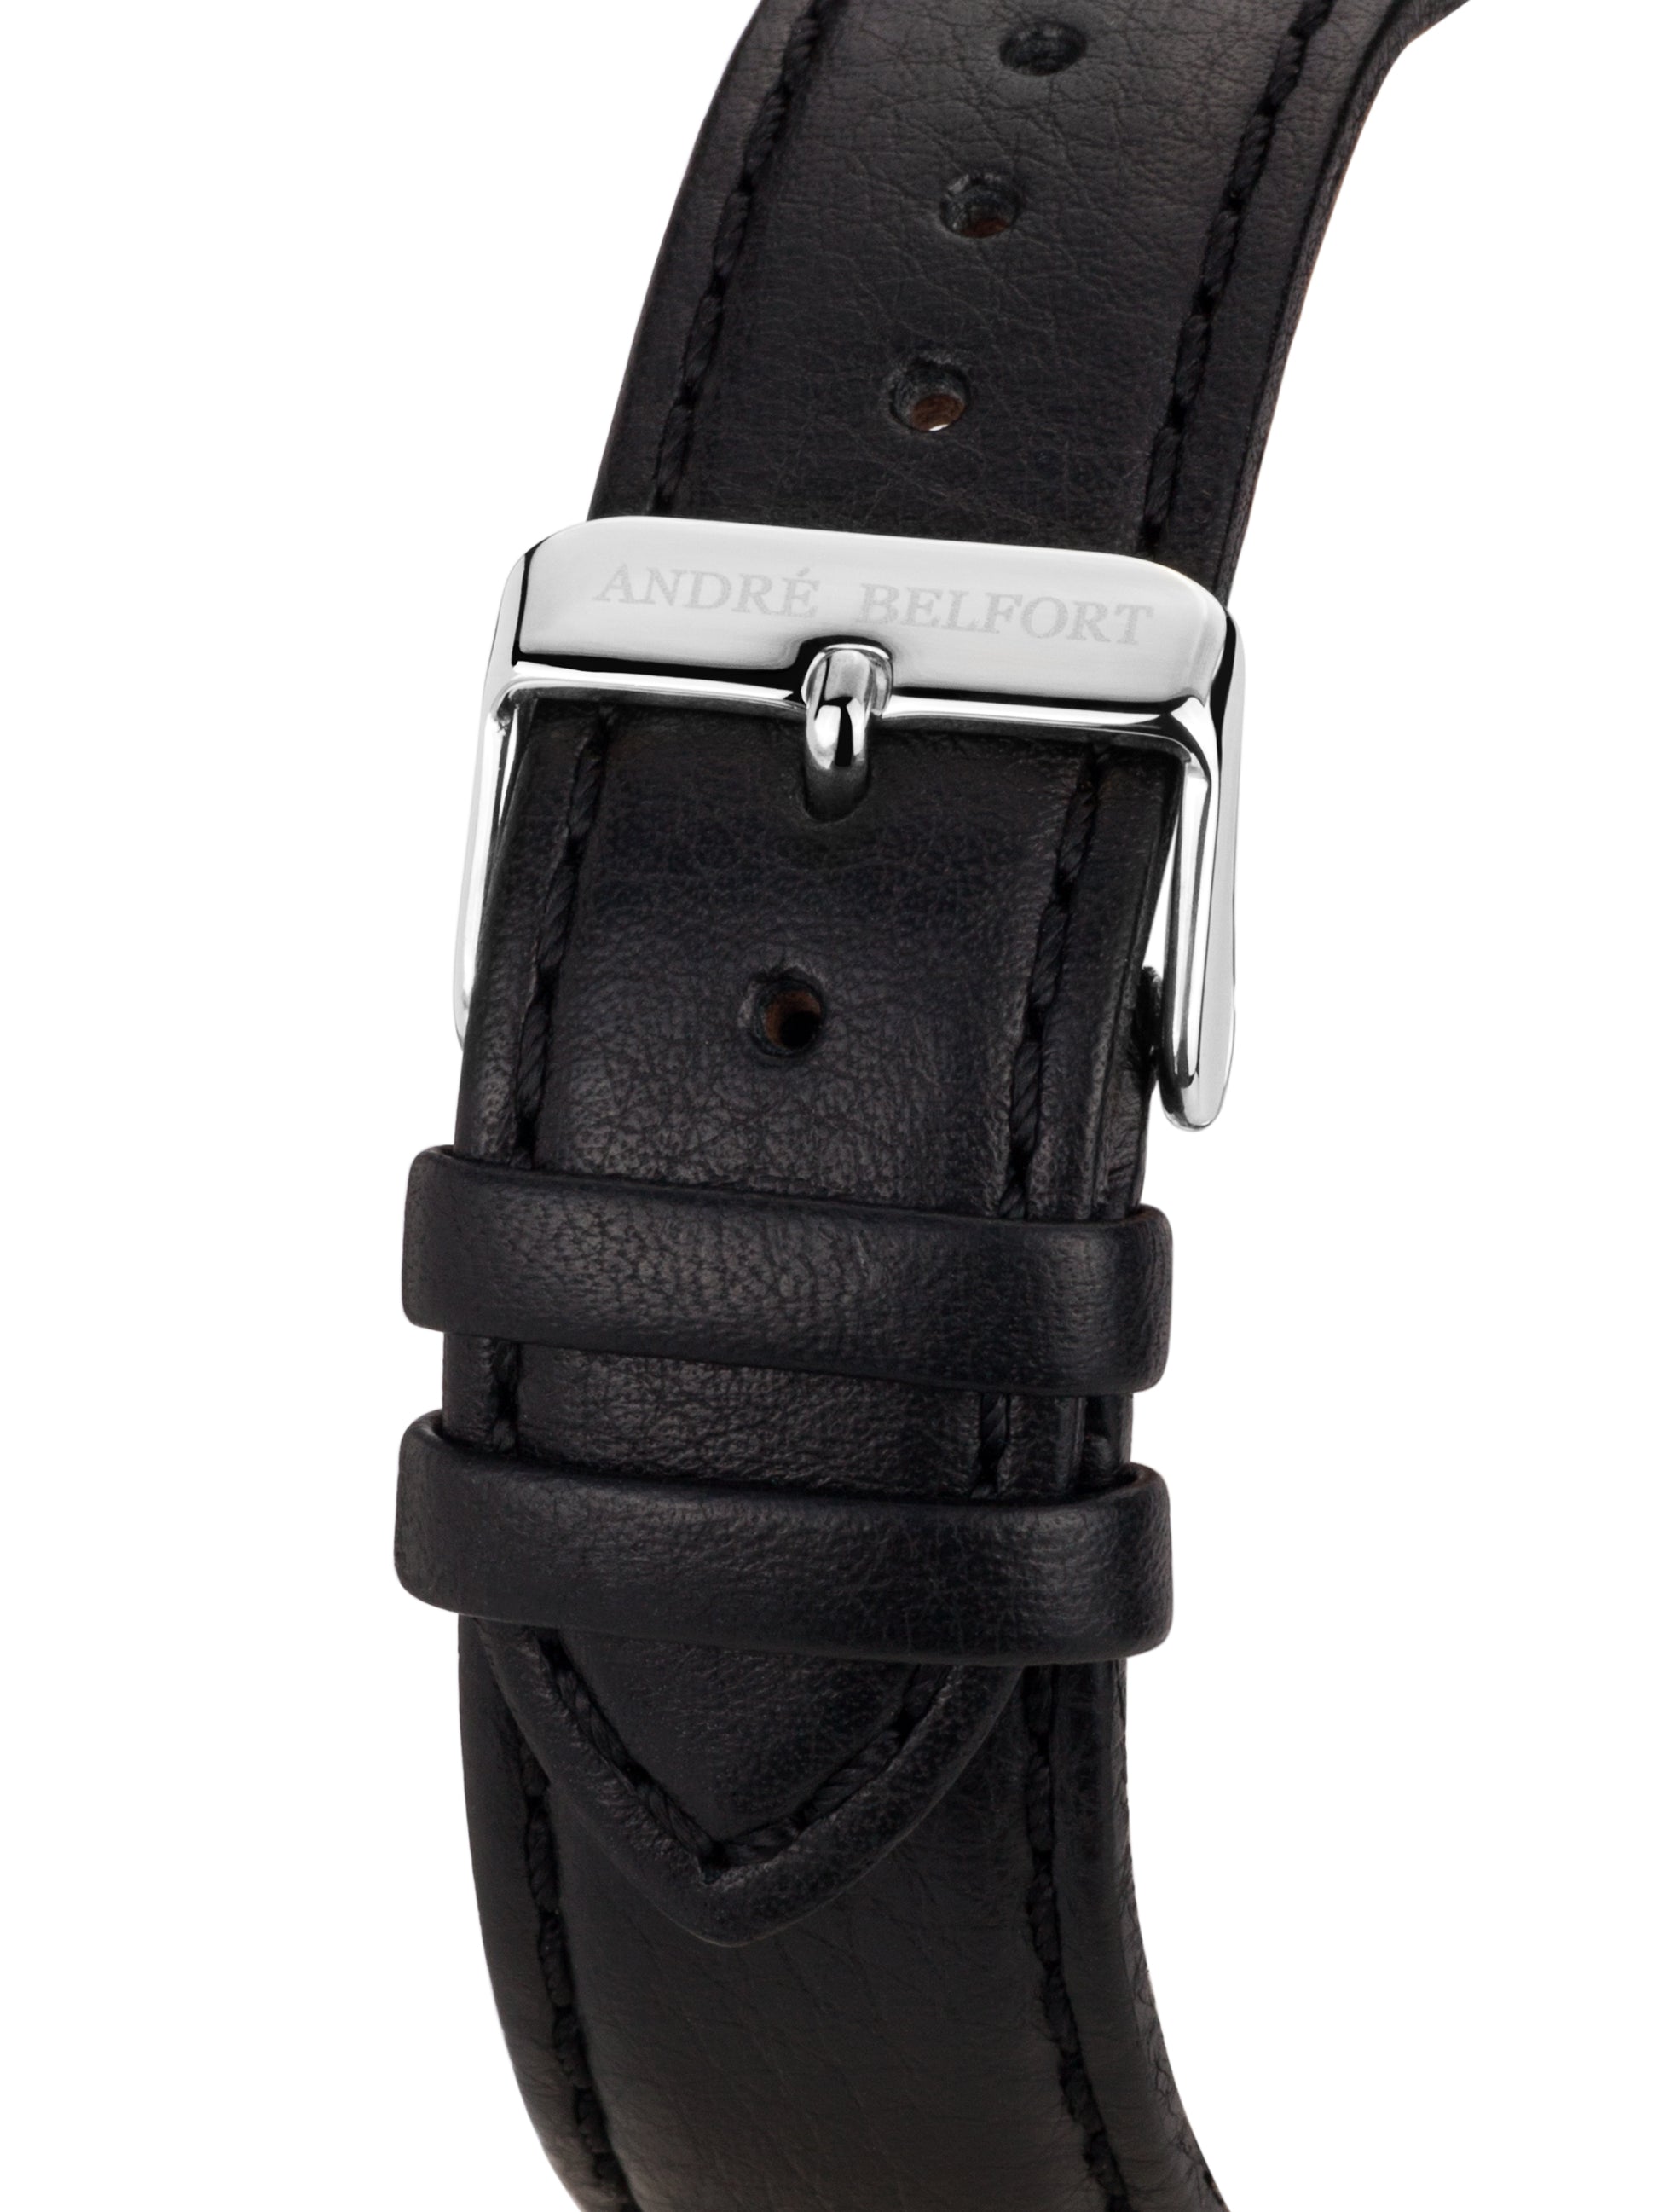 bracelet watches — leather band Empereur — Band — black steel